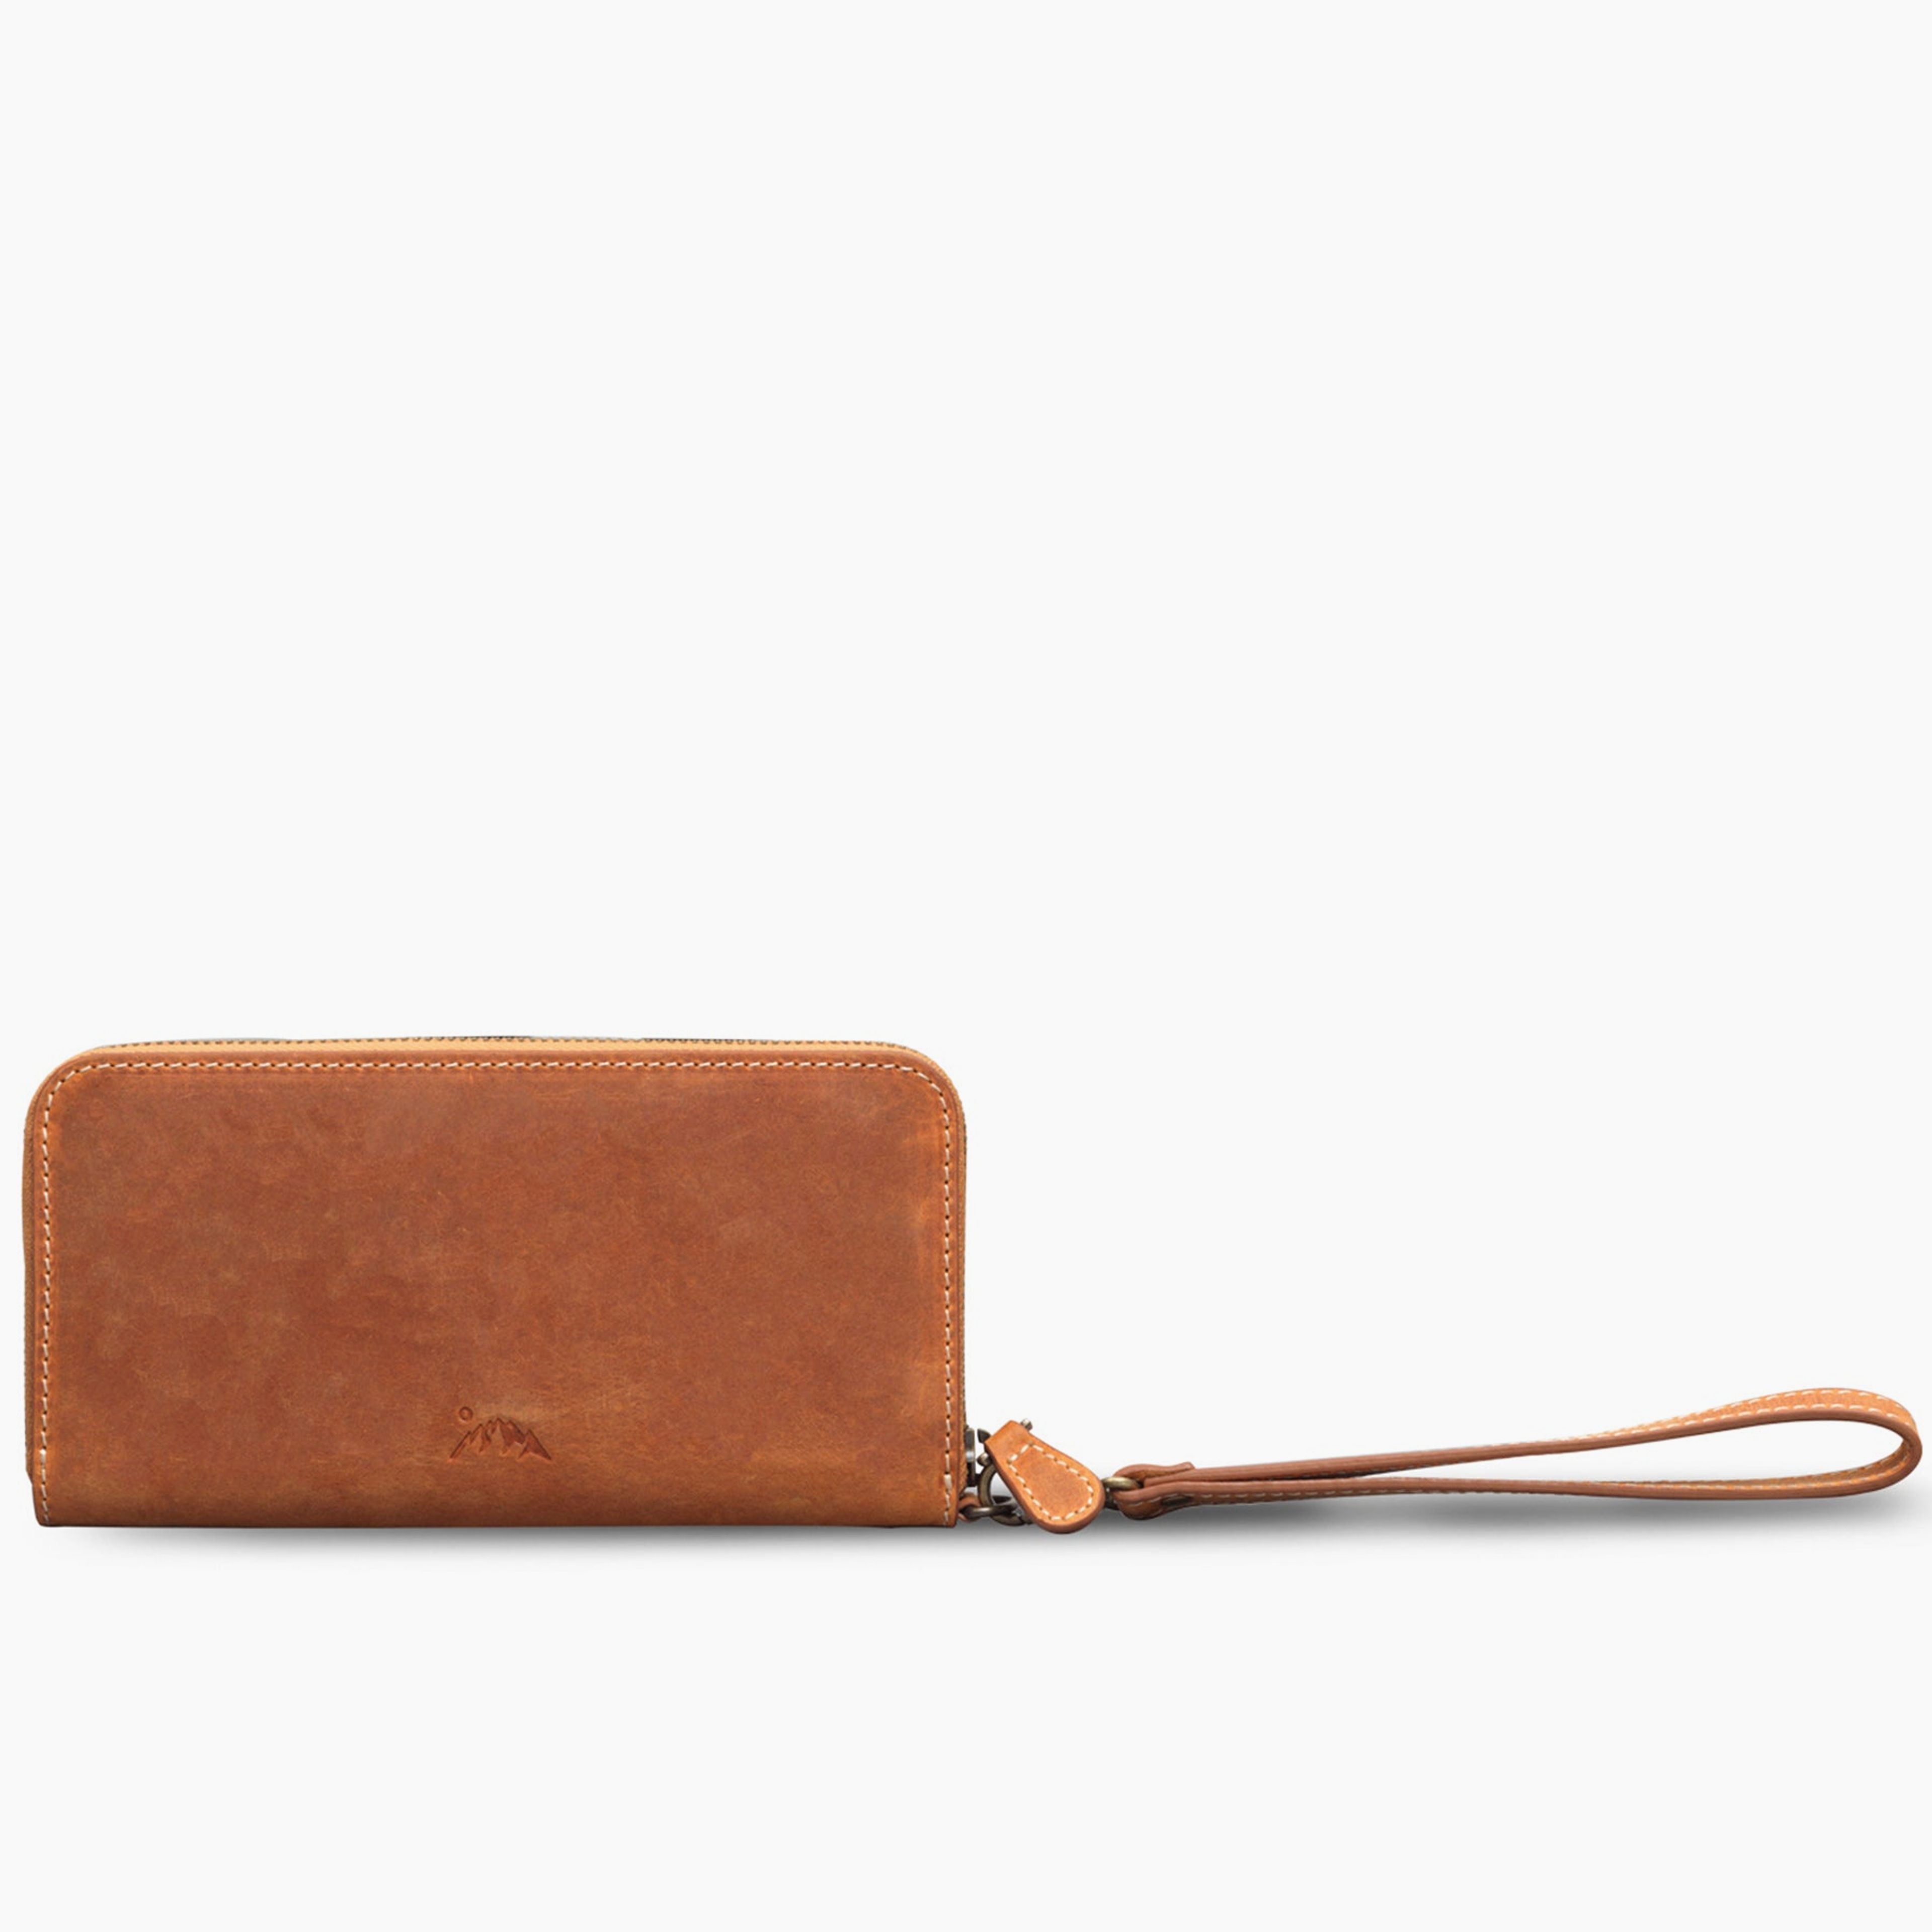 Martha Leather Purse Wallet